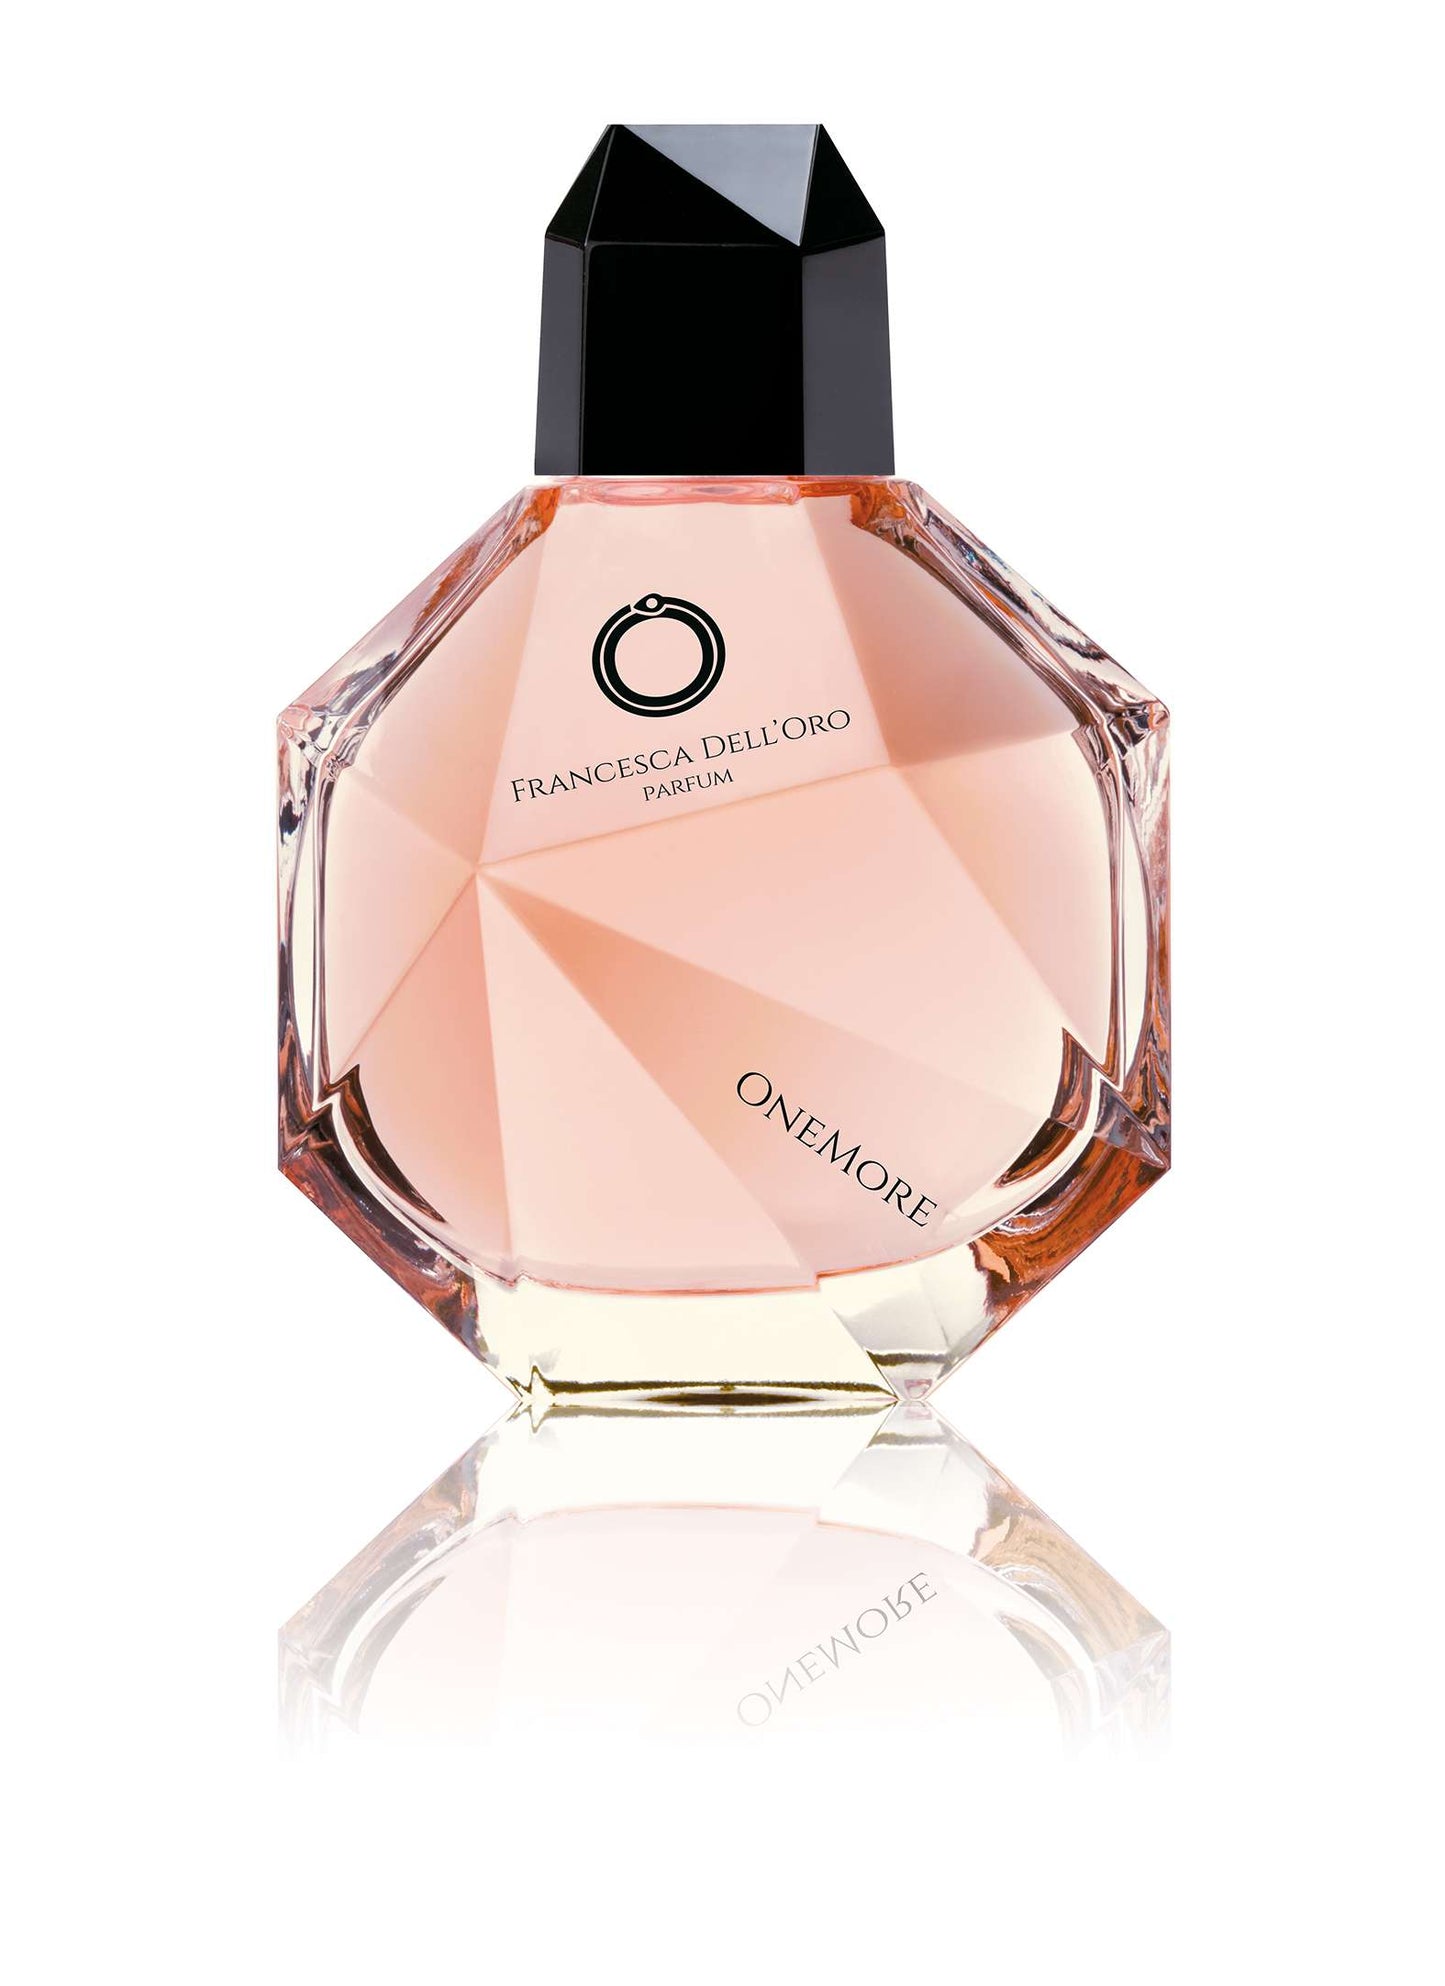 Francesca Dell'Oro Onemore Eau De Parfum 100 ml - RossoLaccaStore